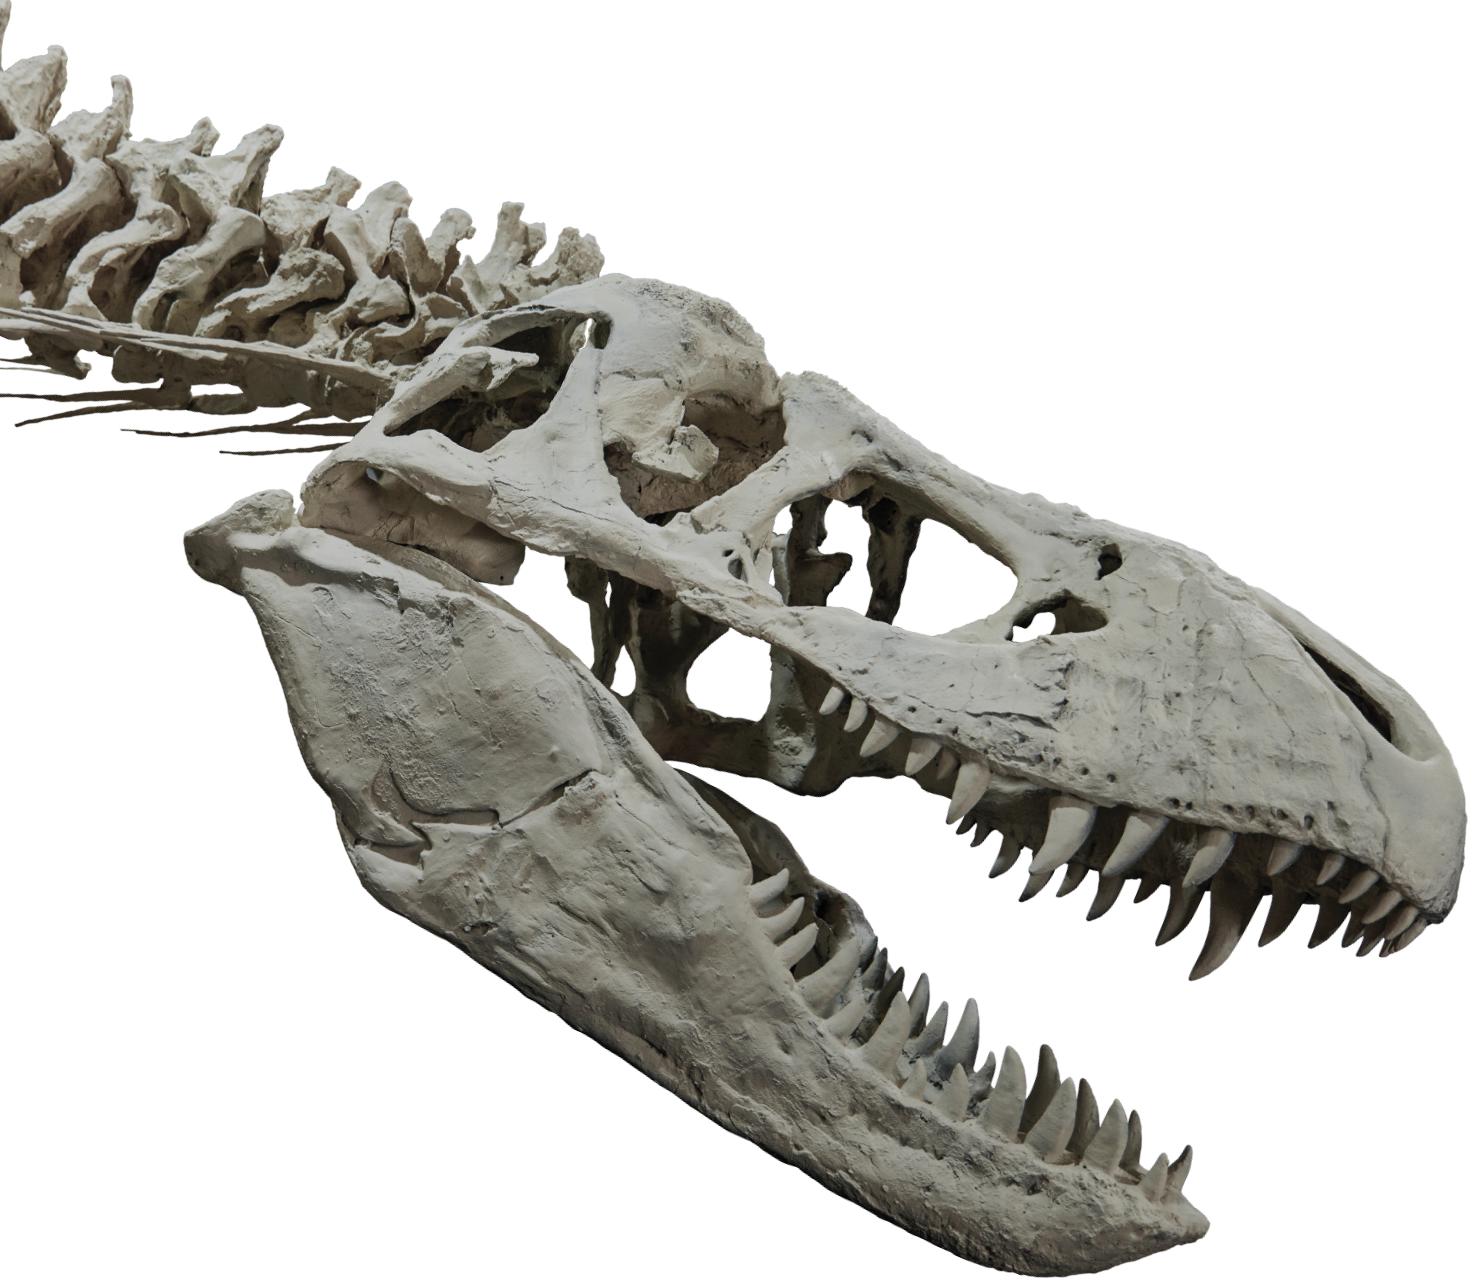 T-rex head and upper body skeleton